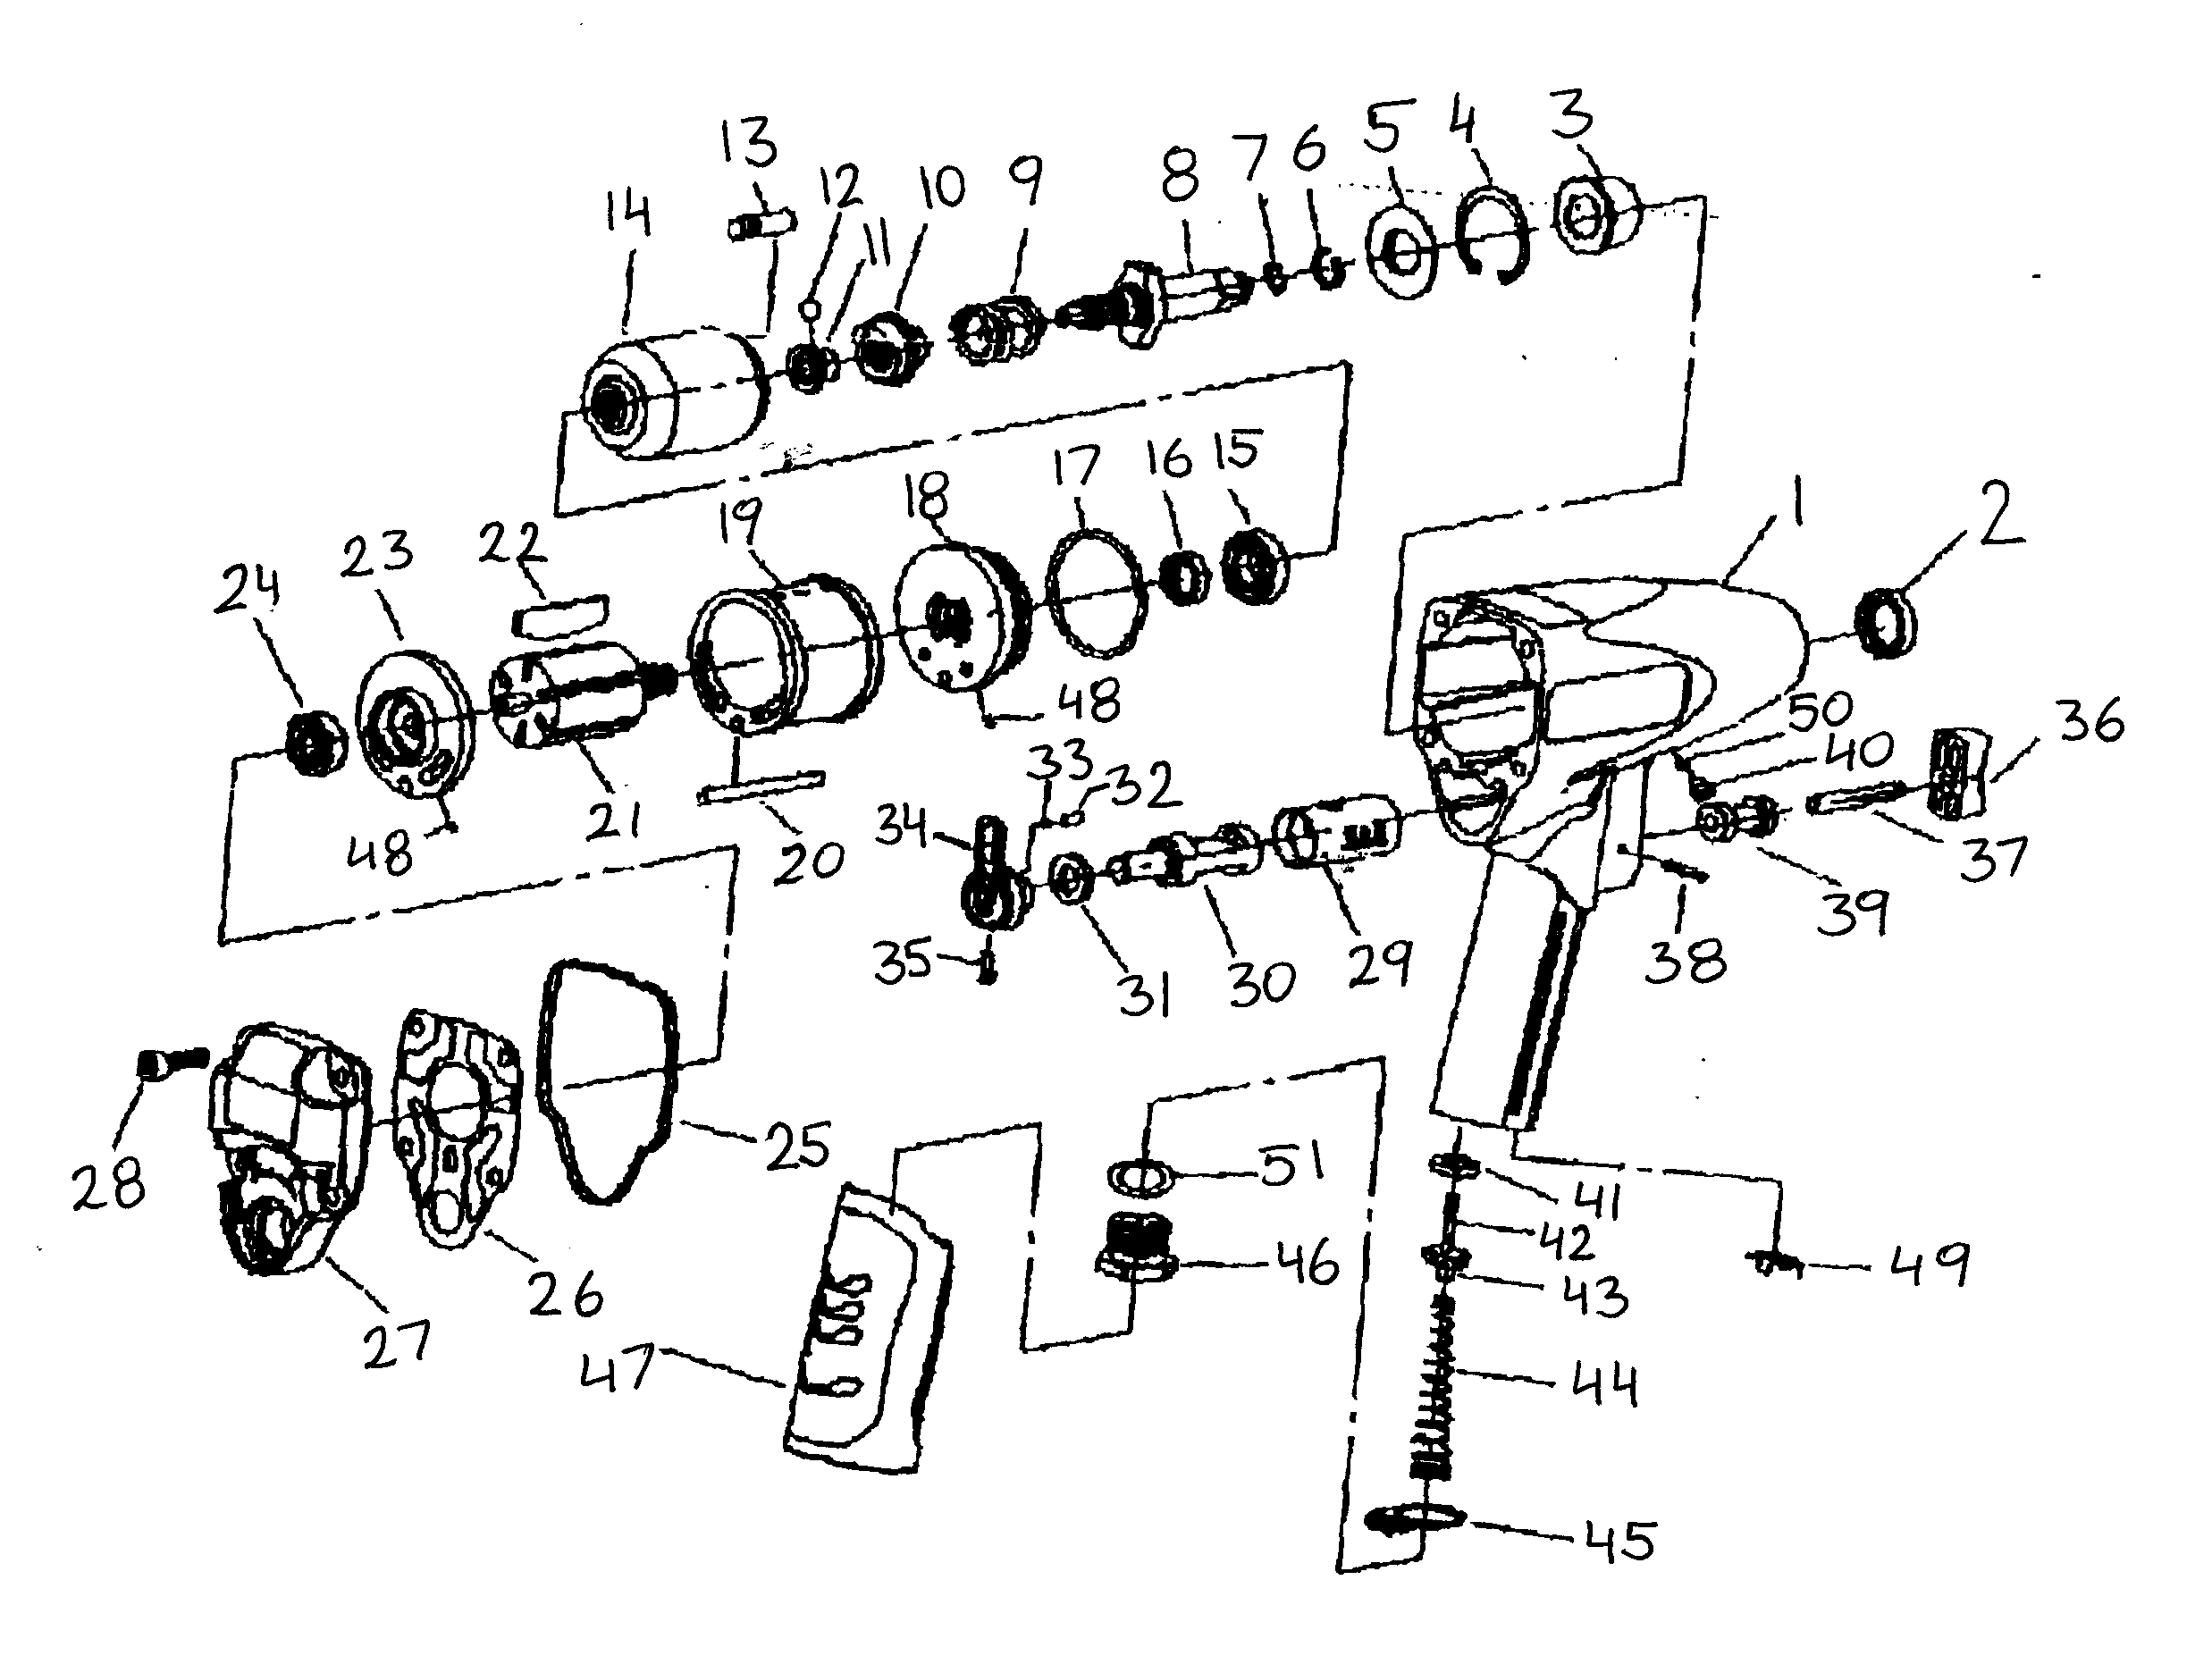 Wrench Diagram  U0026 Parts List For Model 875199810 Craftsman